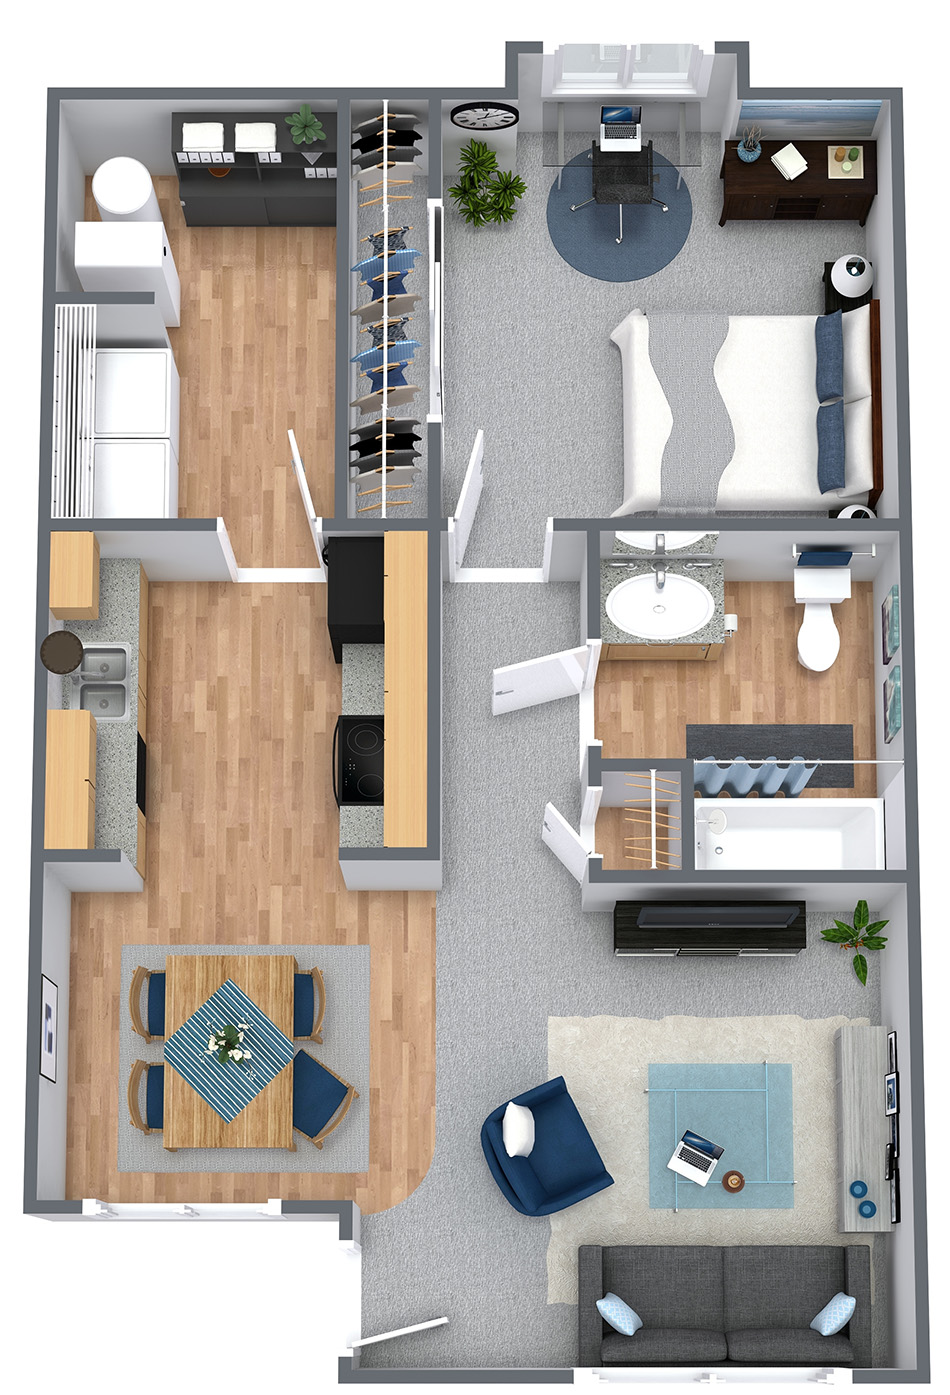 Delaware Crossing Apartments & Townhomes - Floorplan - 1Bedroom/1Bath - Upgraded